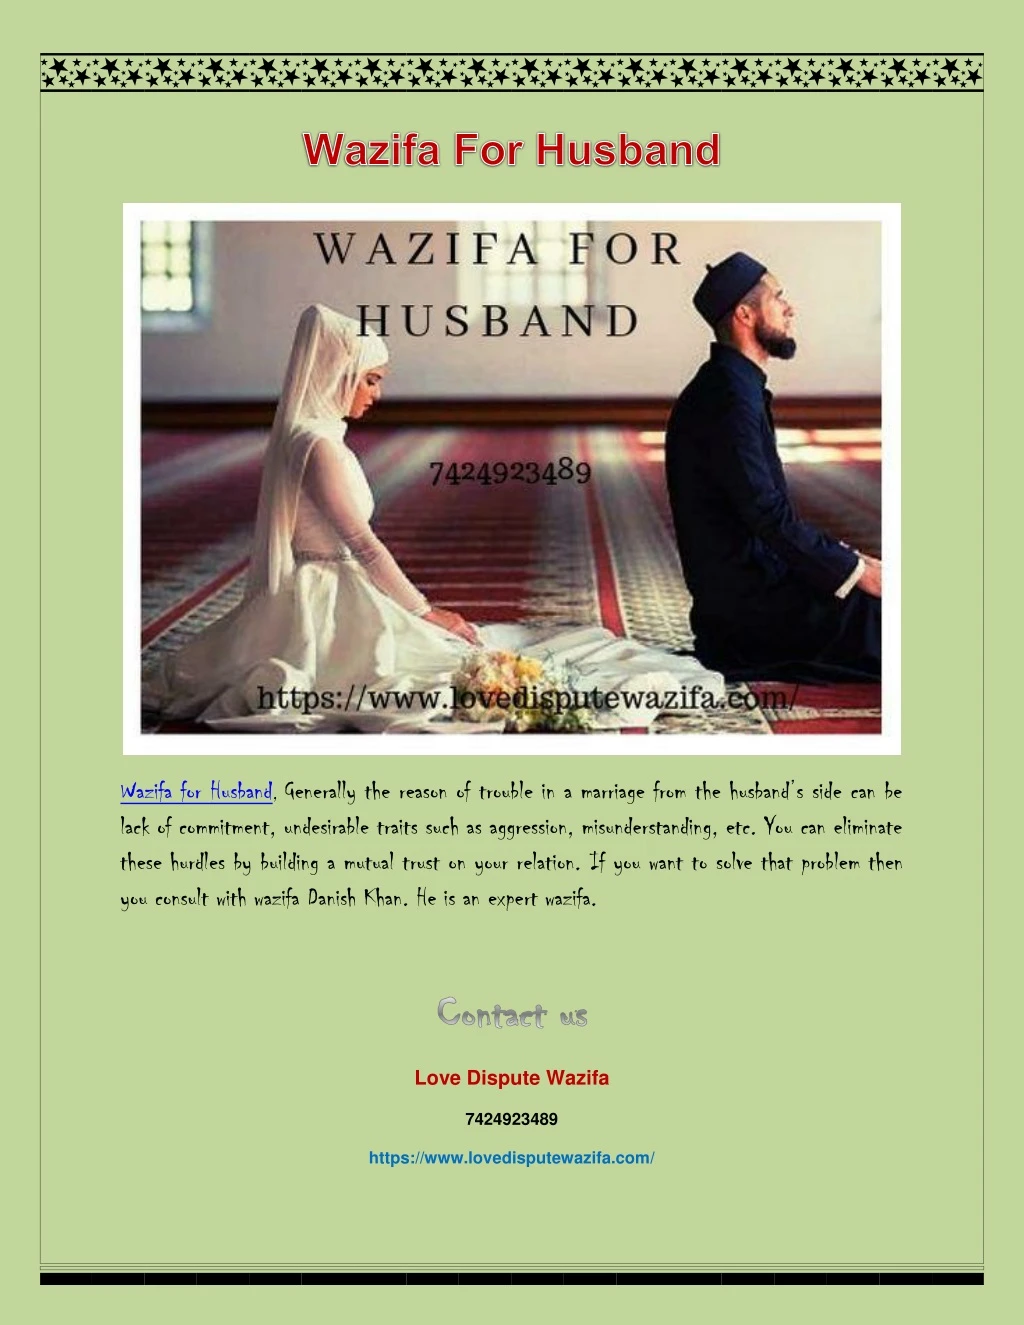 wazifa for husband generally the reason